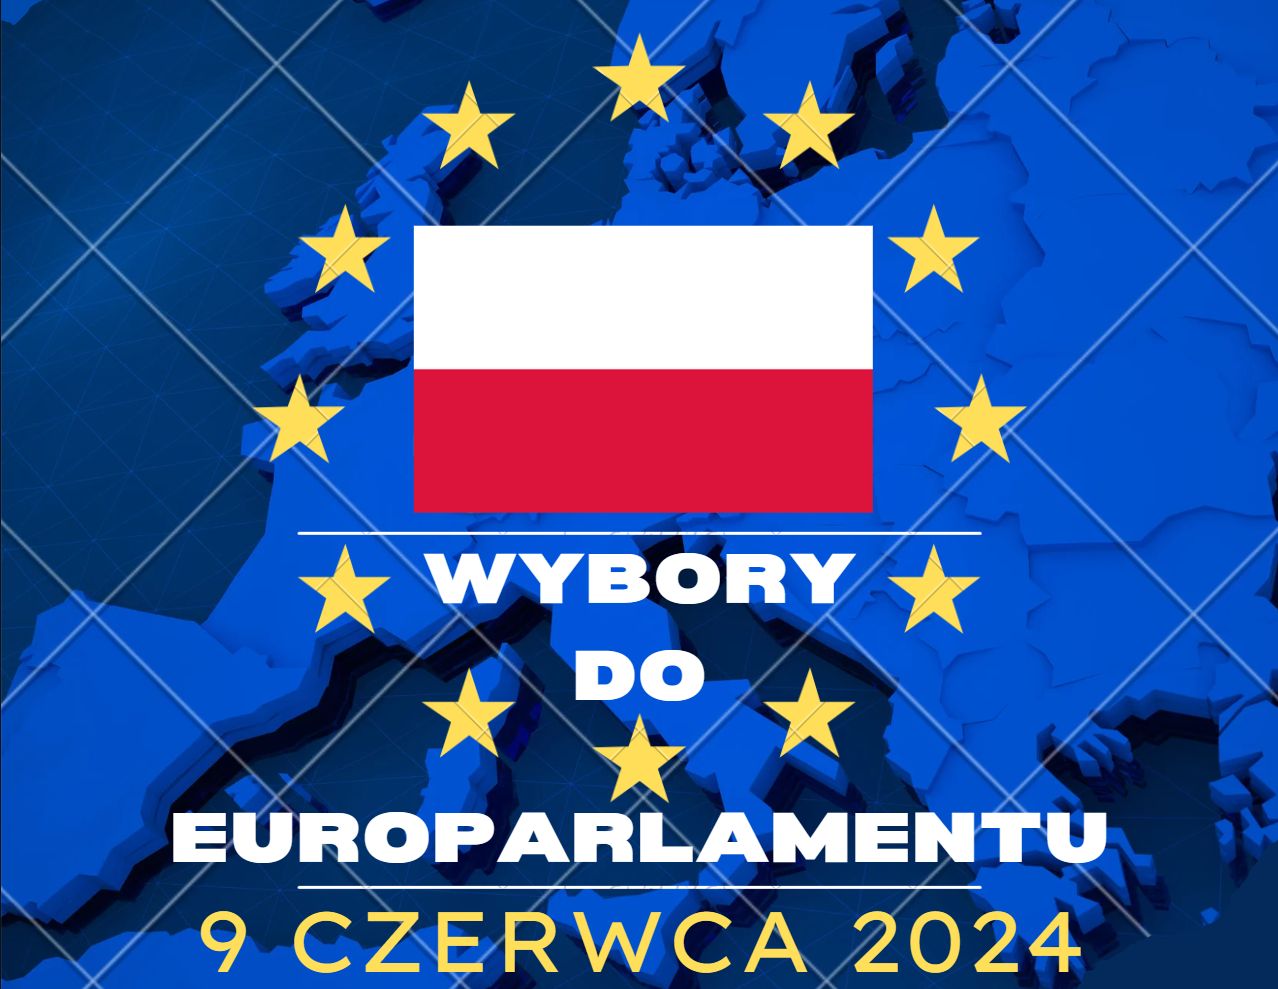 Wybory do Europarlamentu 2024 